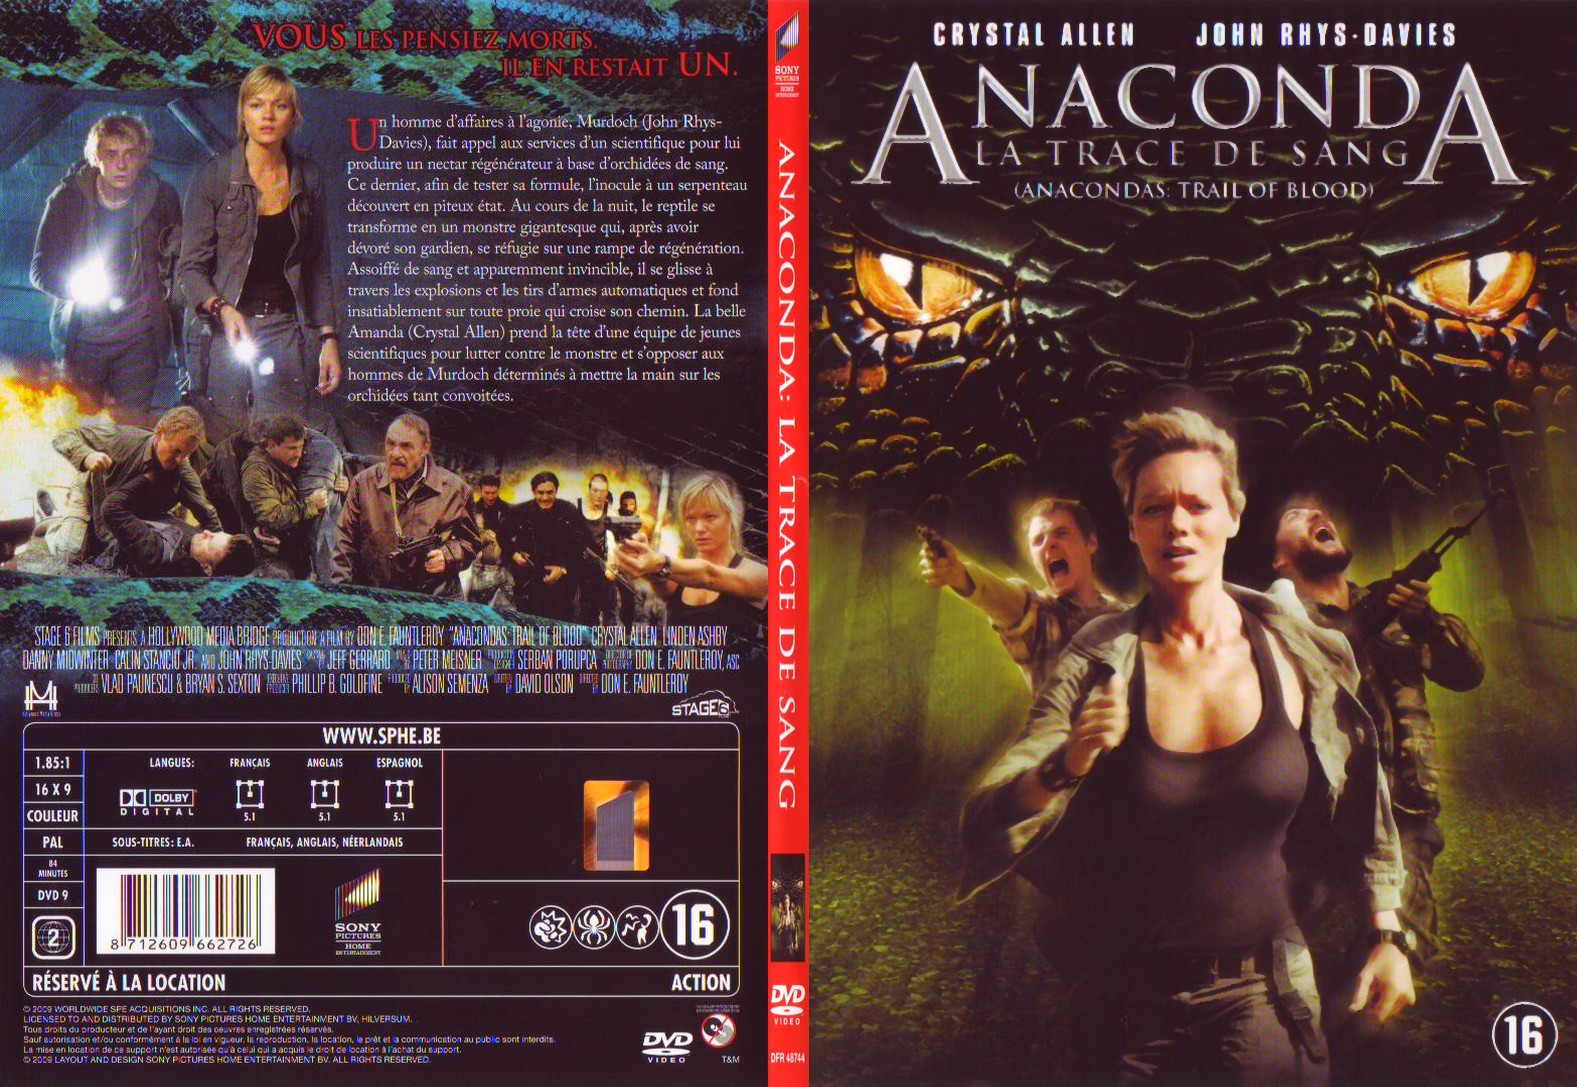 Jaquette DVD Anaconda 4 la trace de sang - SLIM